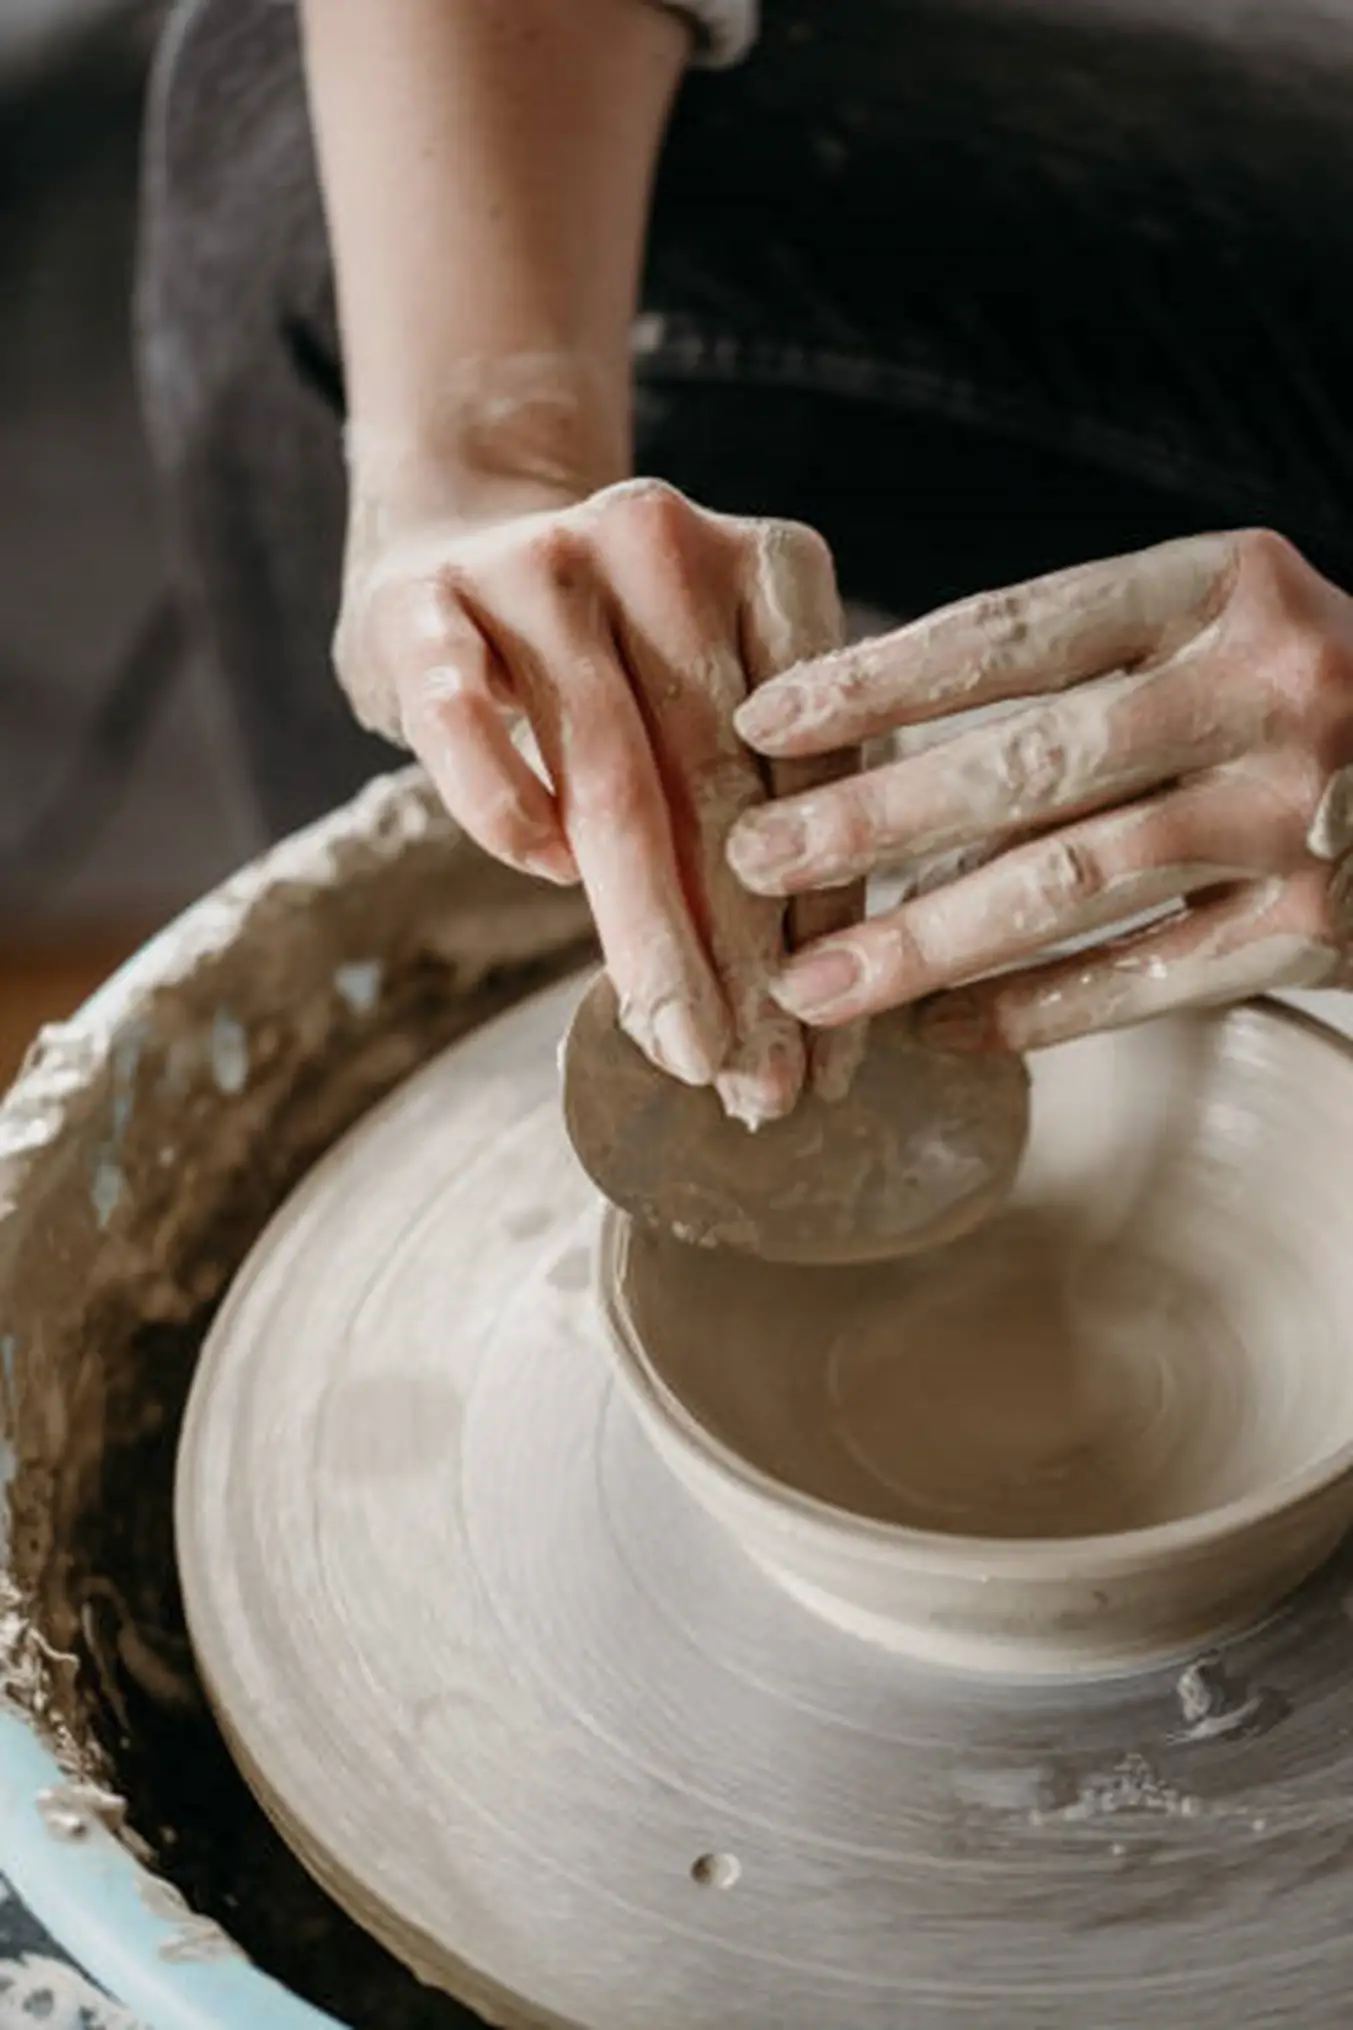 Globeagle Ceramic Pottery Ribs Tool Kit Review